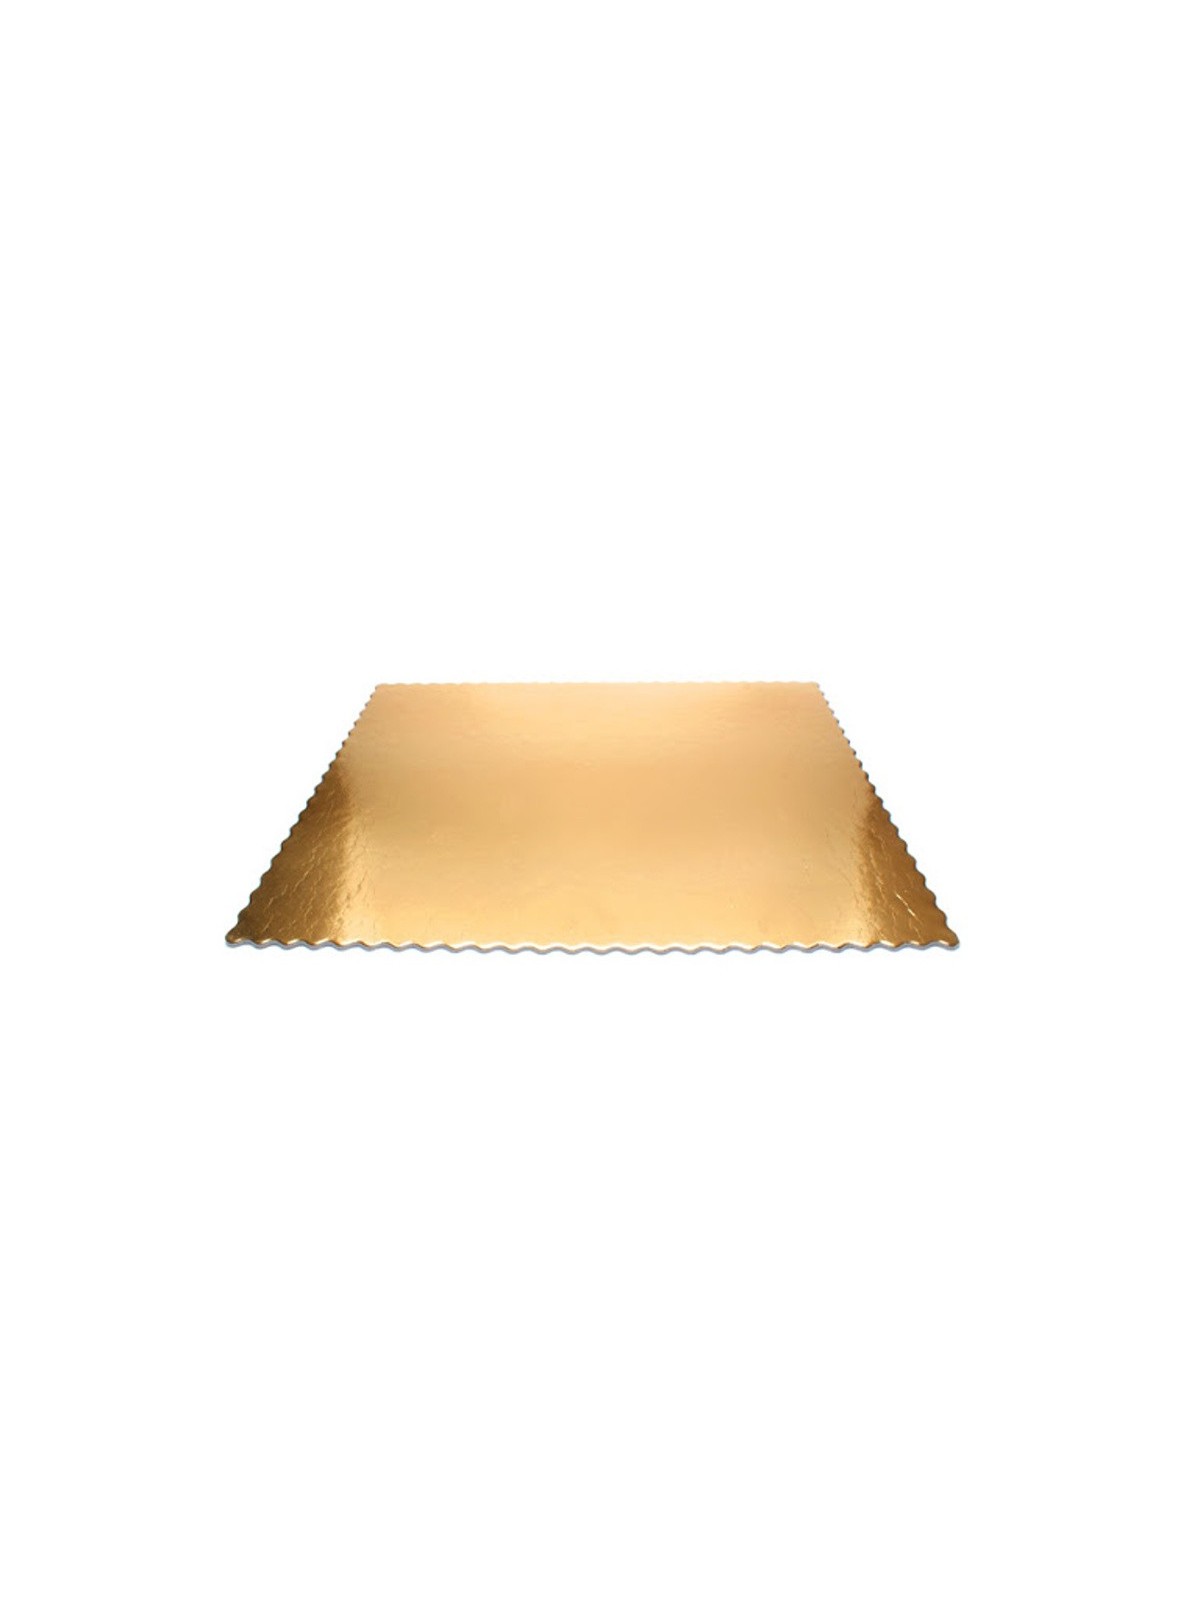 Feste Tortenplatten  Gold / Schwarz - RECHTECK 46 x 36 cm